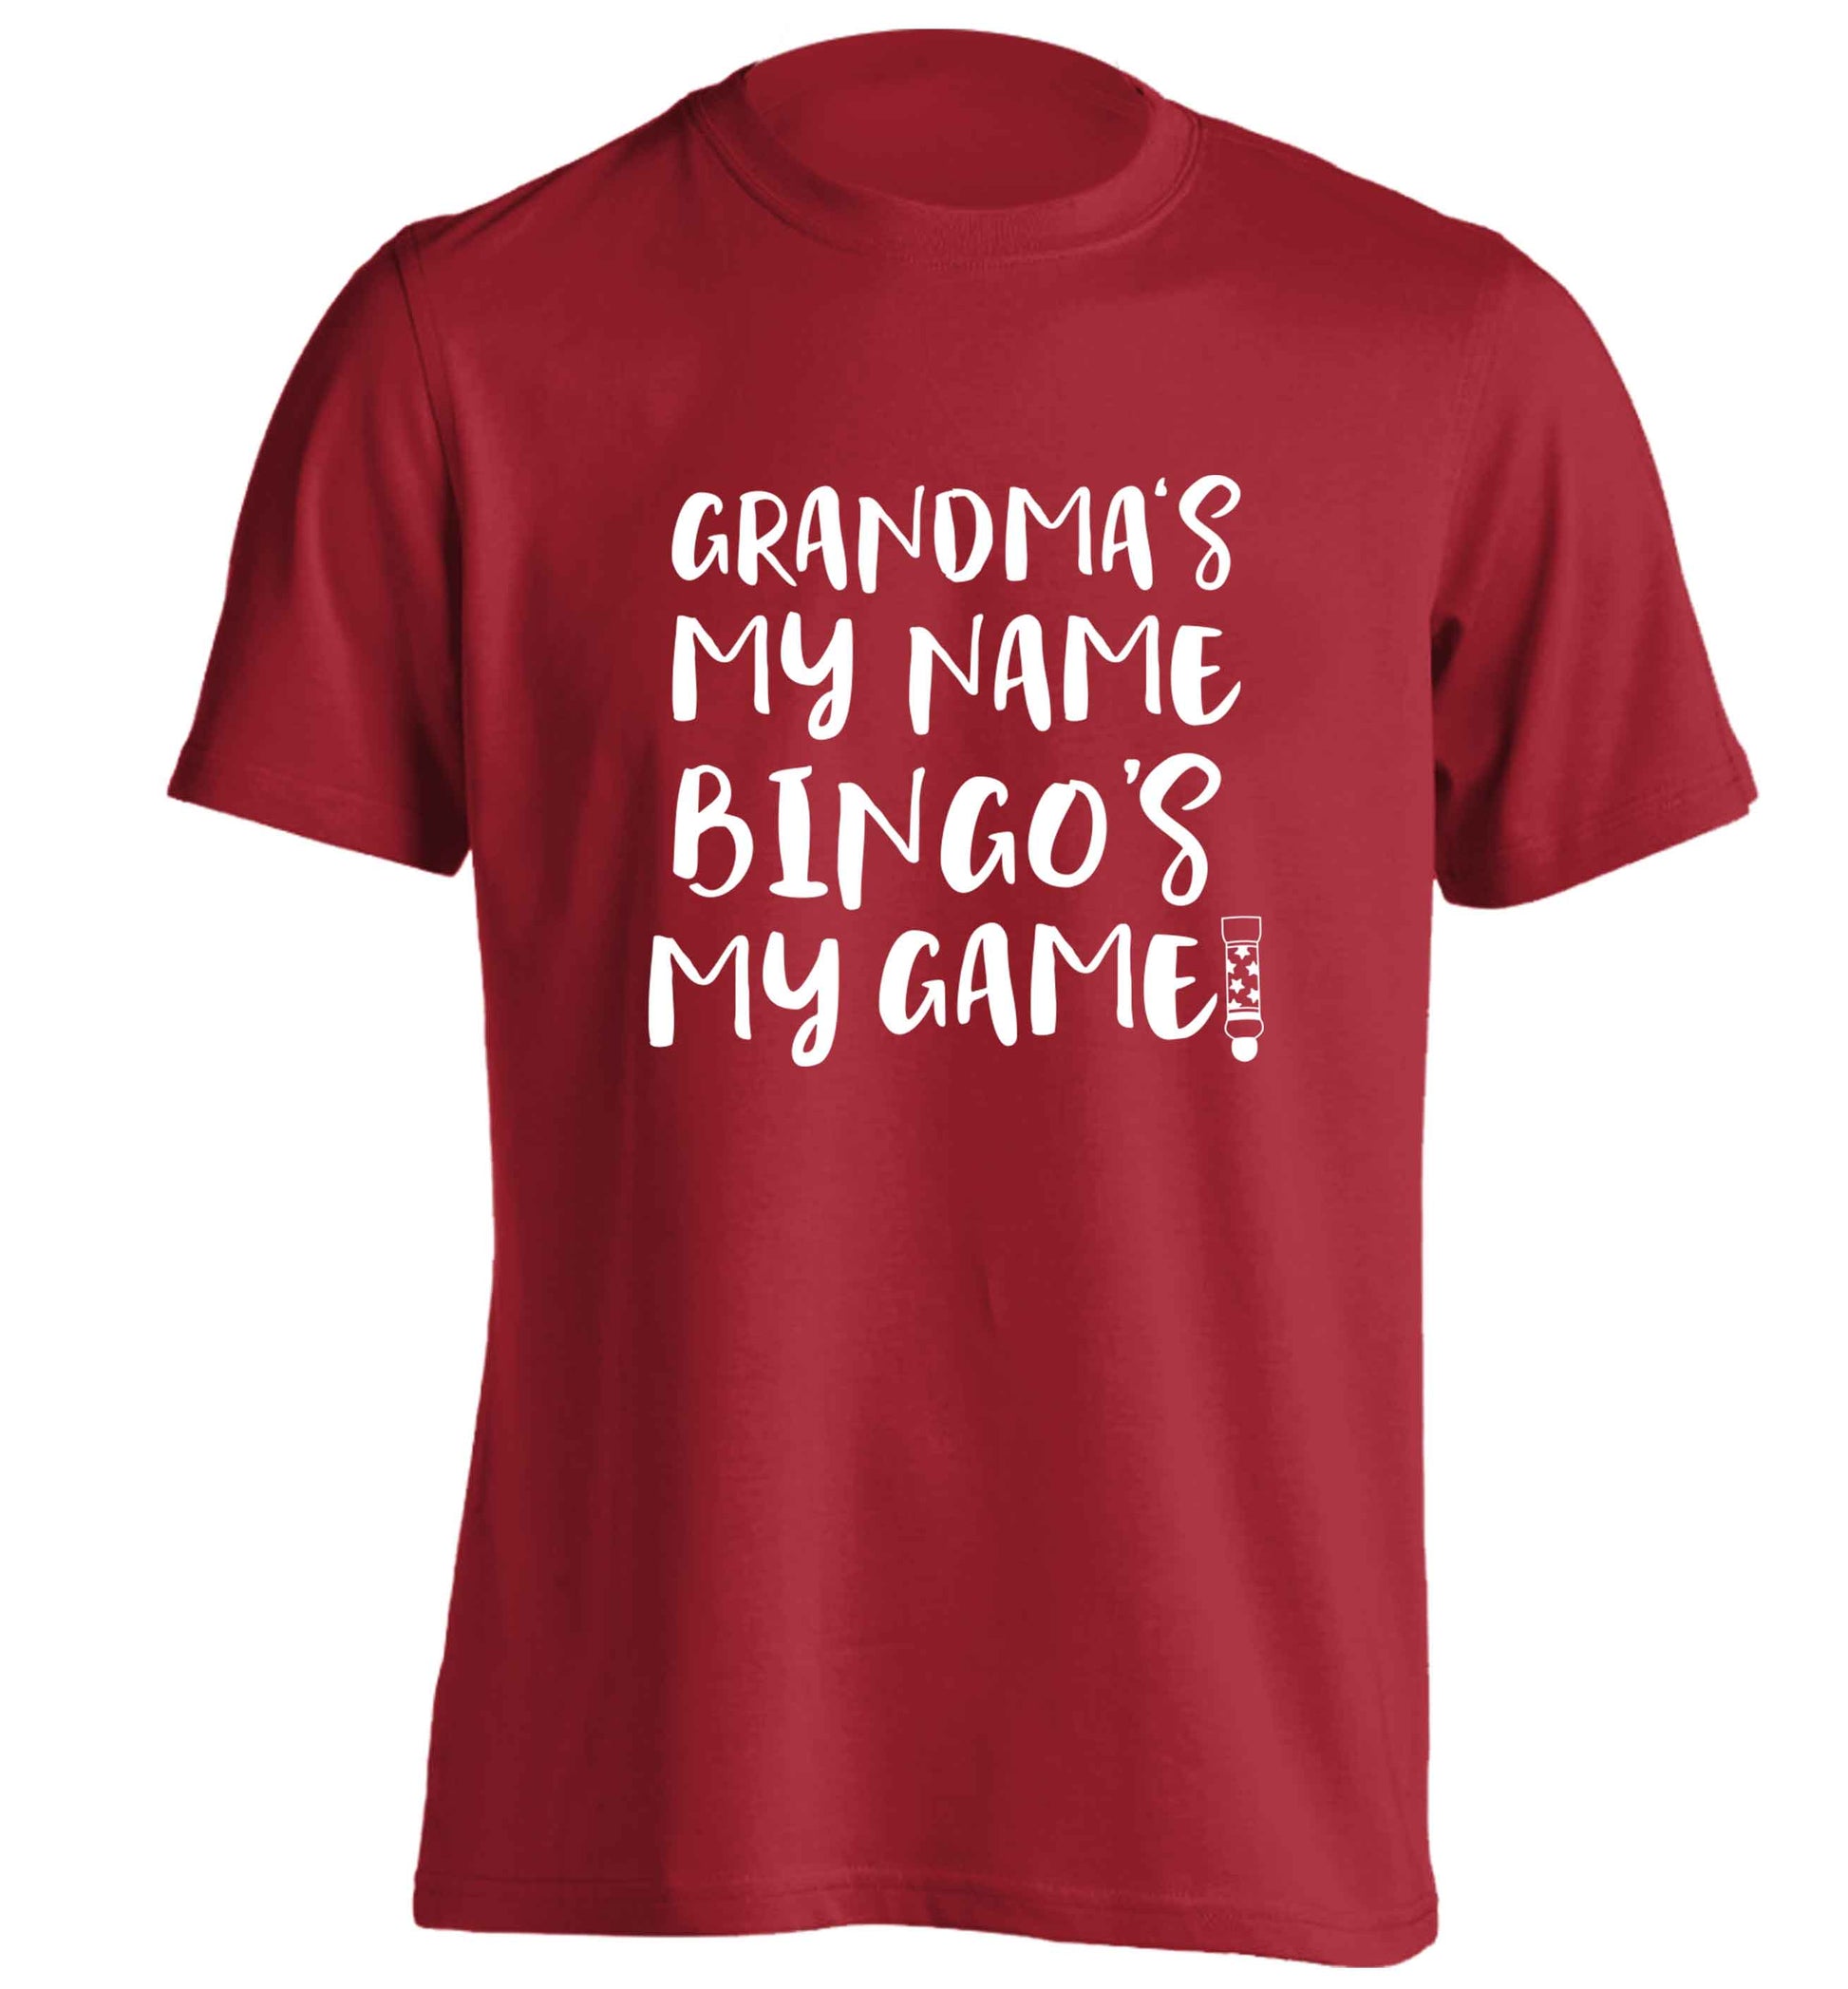 Grandma's my name bingo's my game! adults unisex red Tshirt 2XL